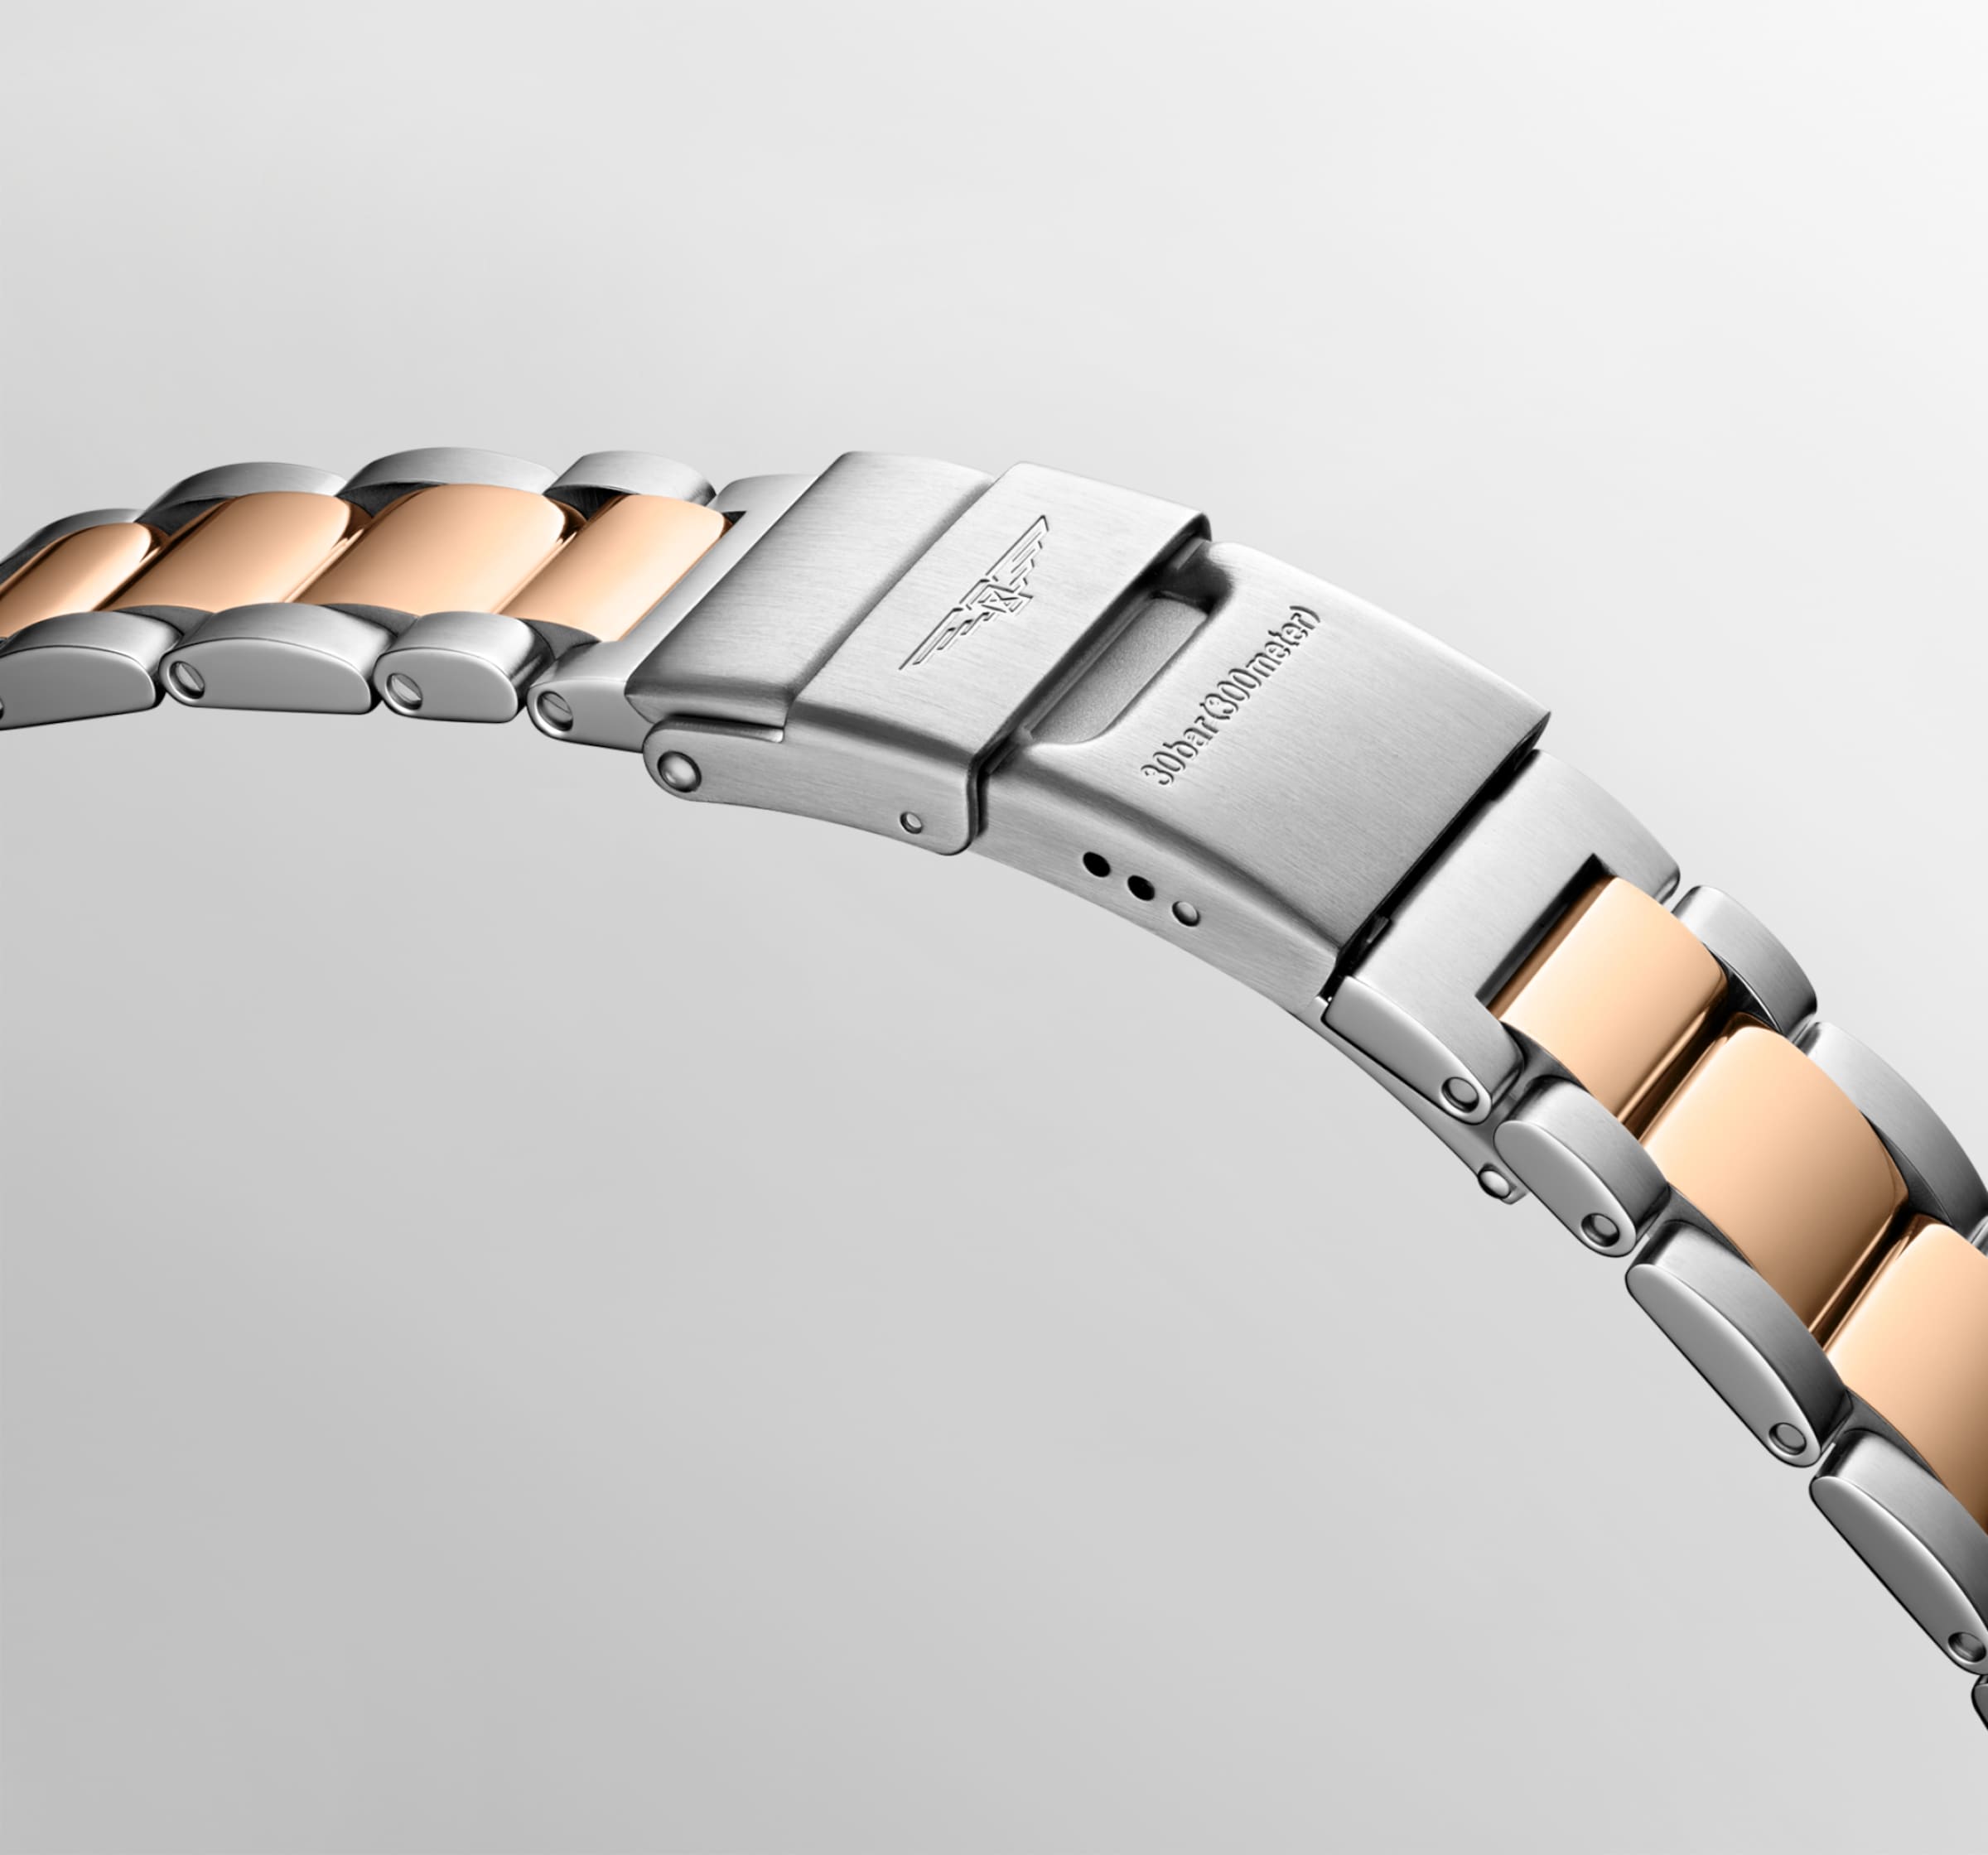 Longines HYDROCONQUEST Quartz Stainless steel and ceramic bezel Watch - L3.370.3.89.6